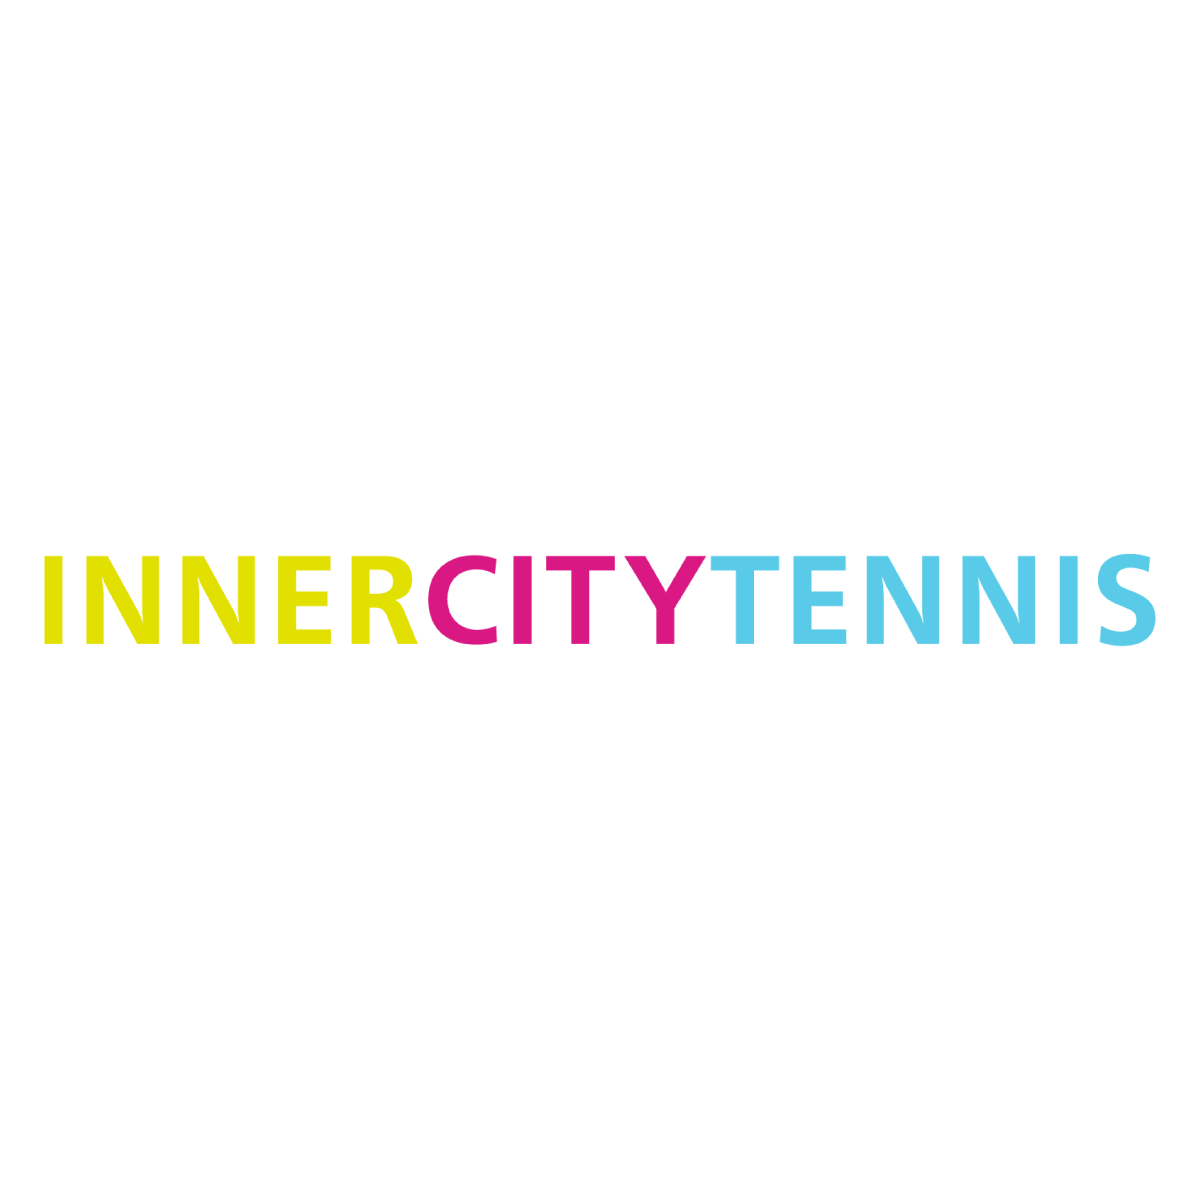 Tenis en la ciudad
innercitytennis.org 